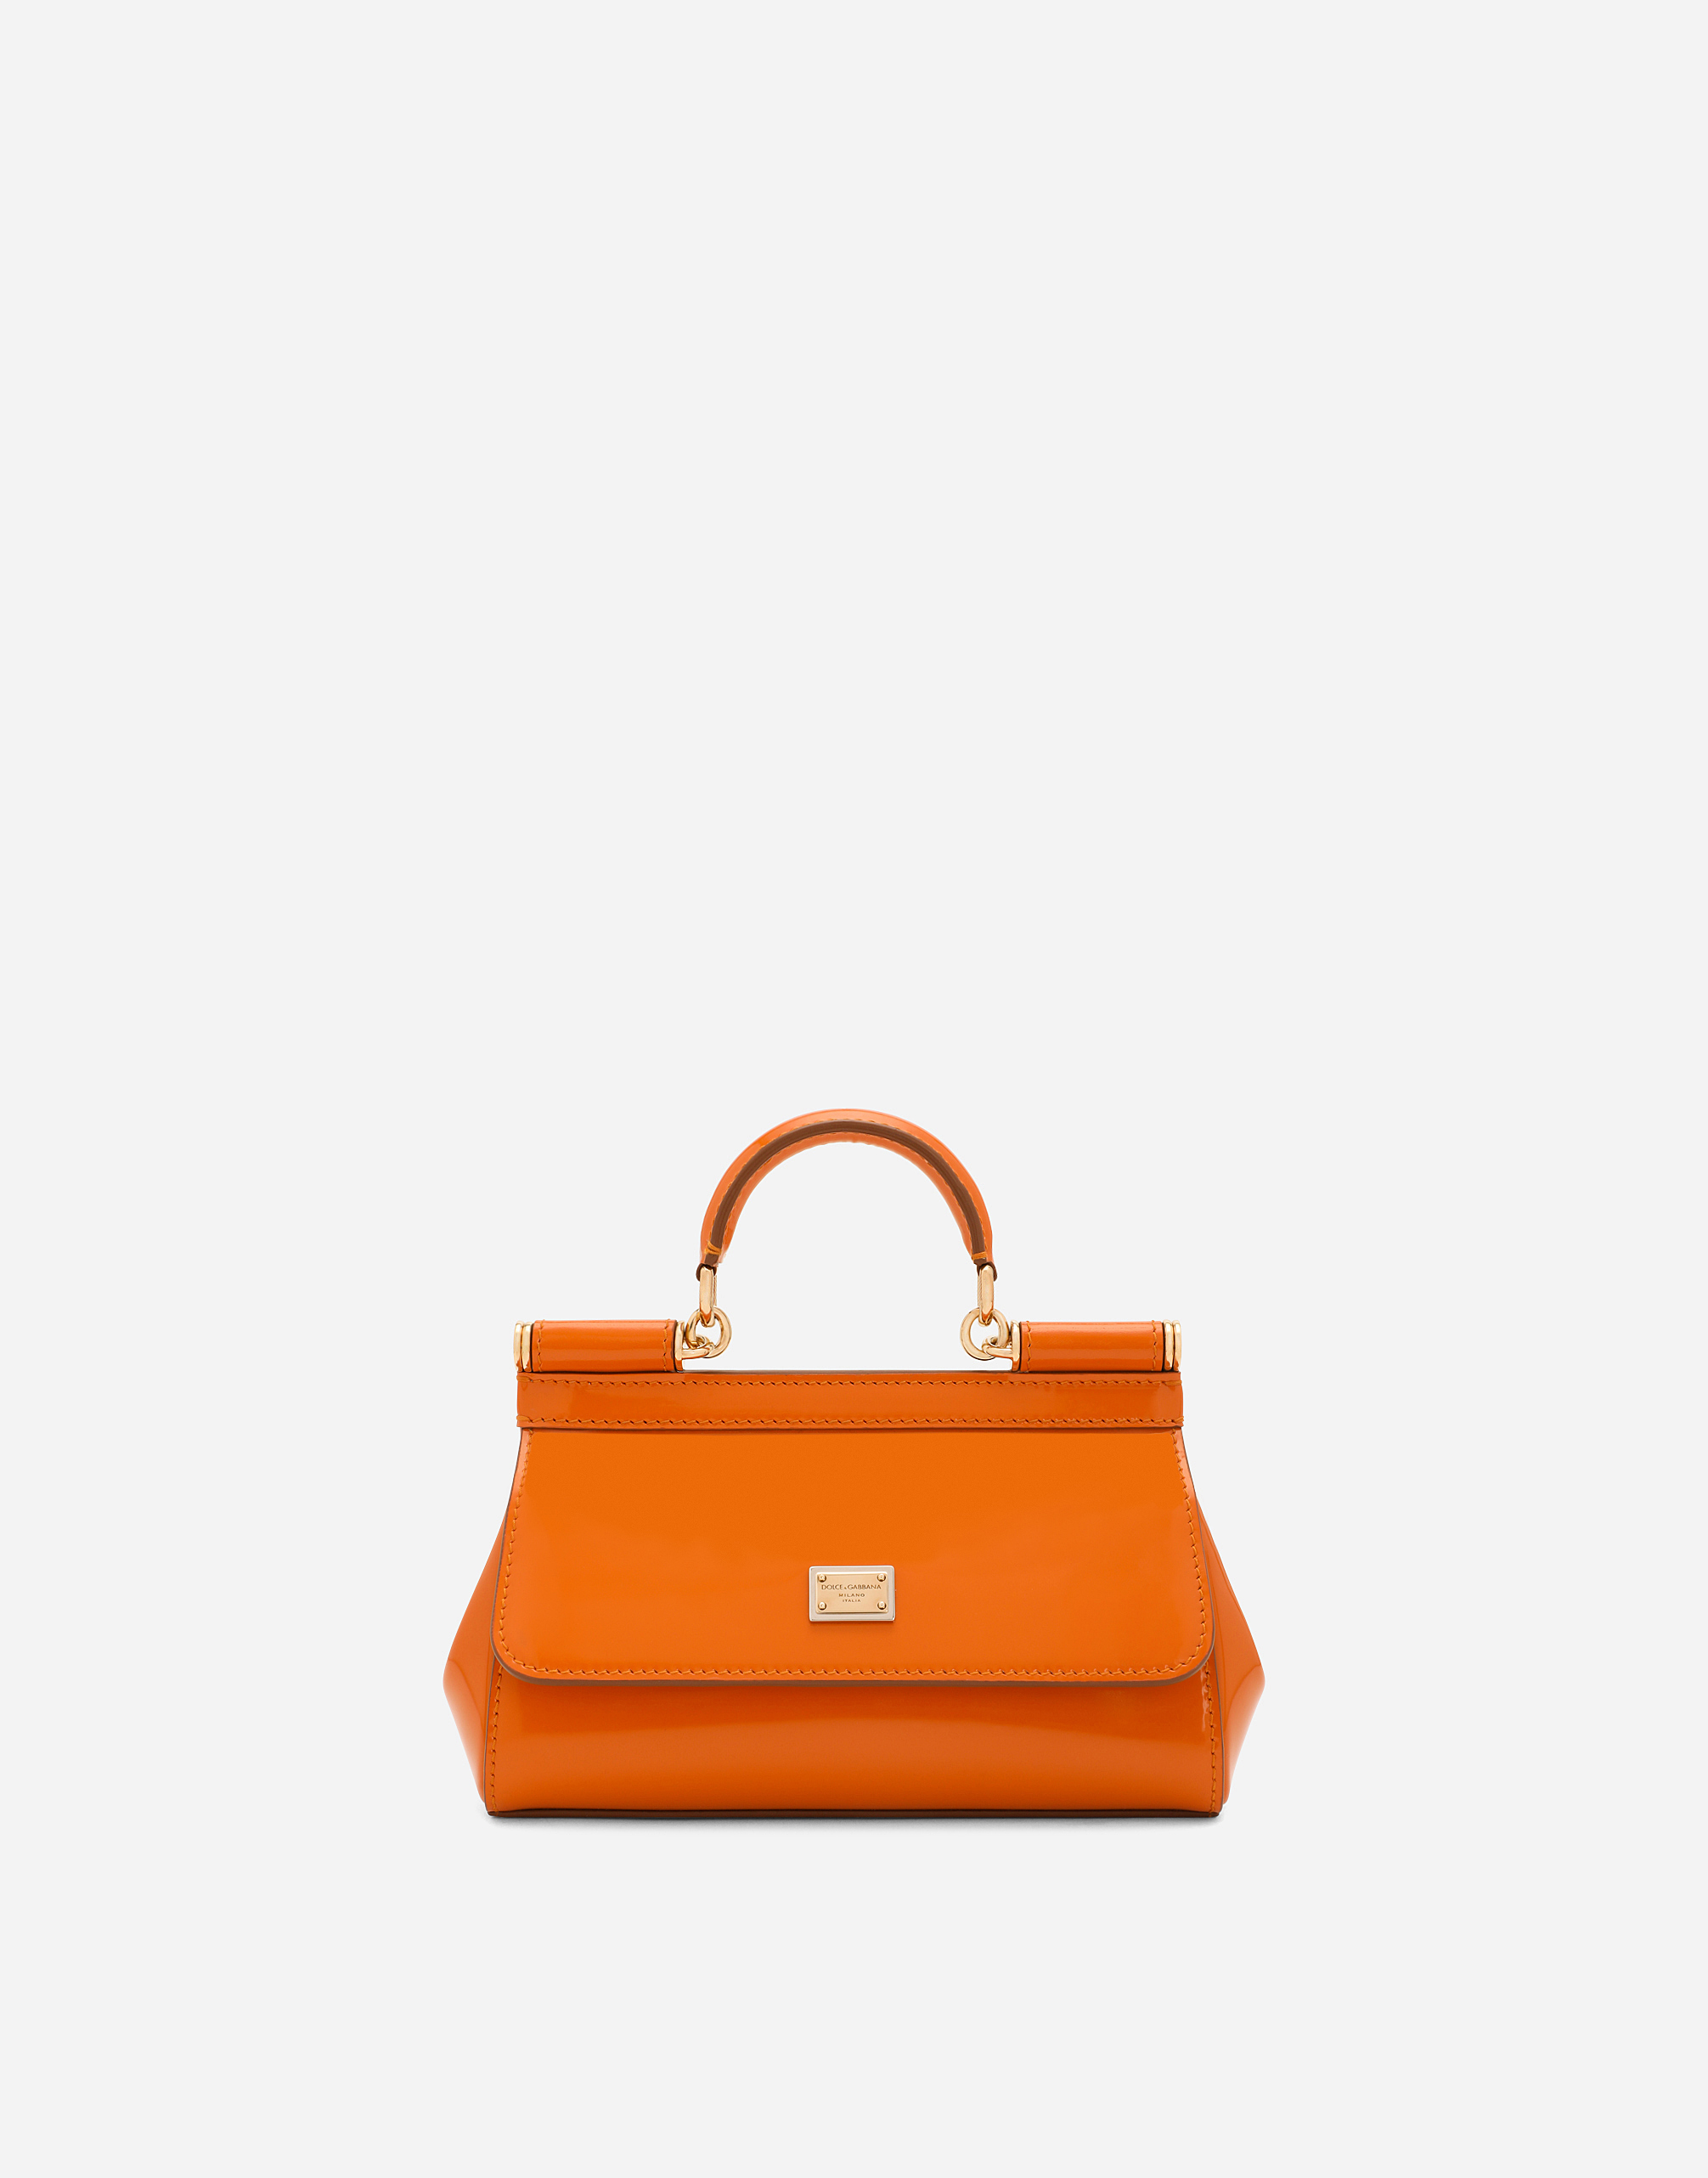 Dolce & Gabbana Orange Handbags